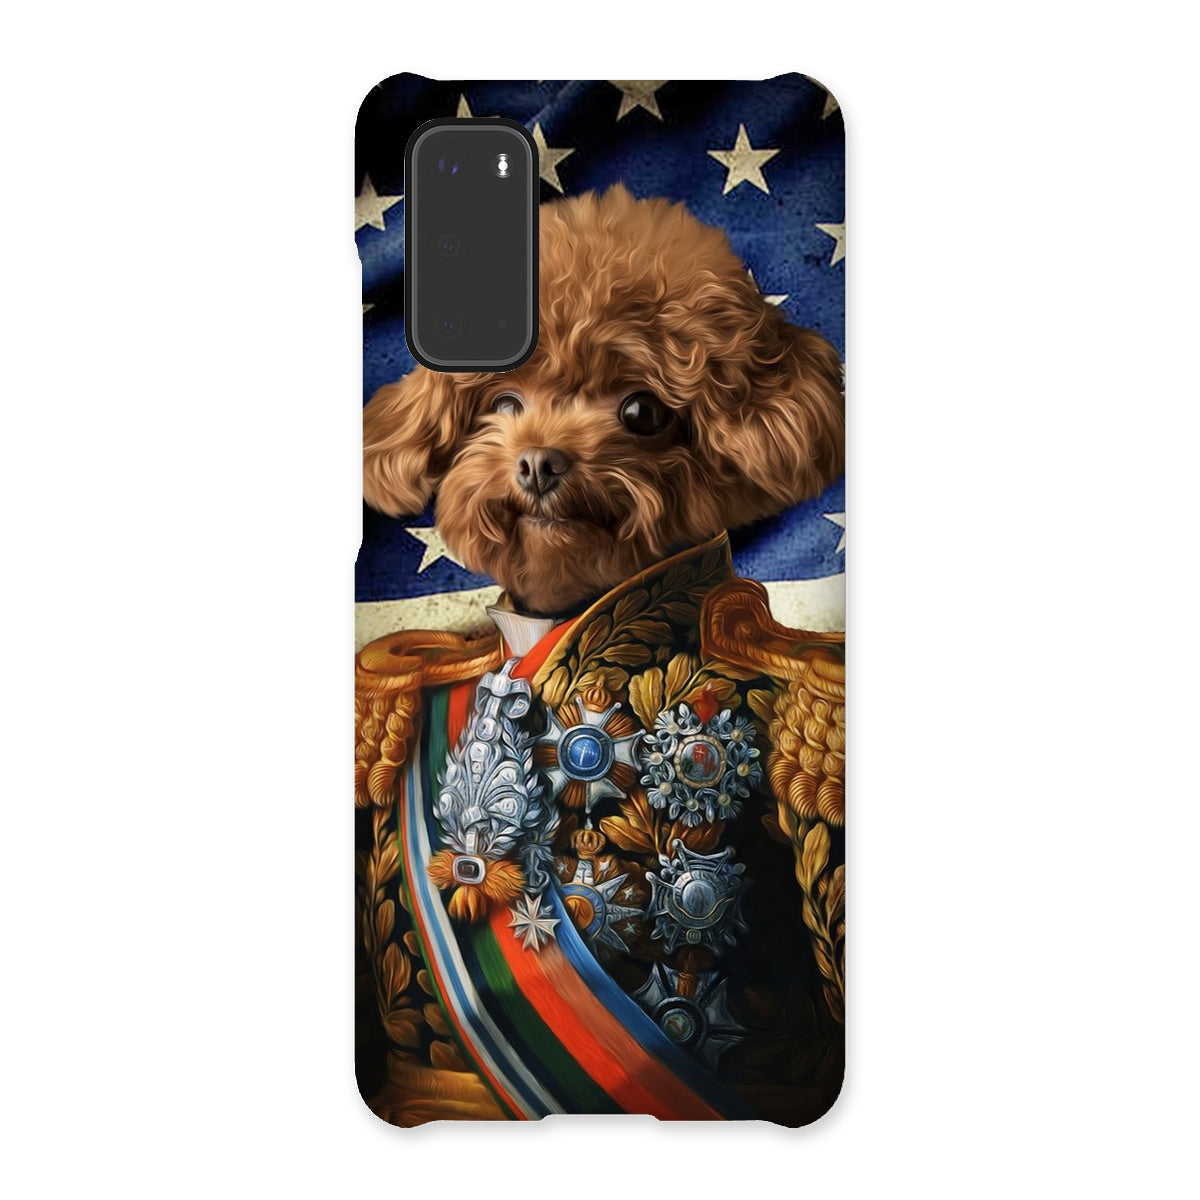 The First Lieutenant USA Flag Edition: Custom Pet Phone Case